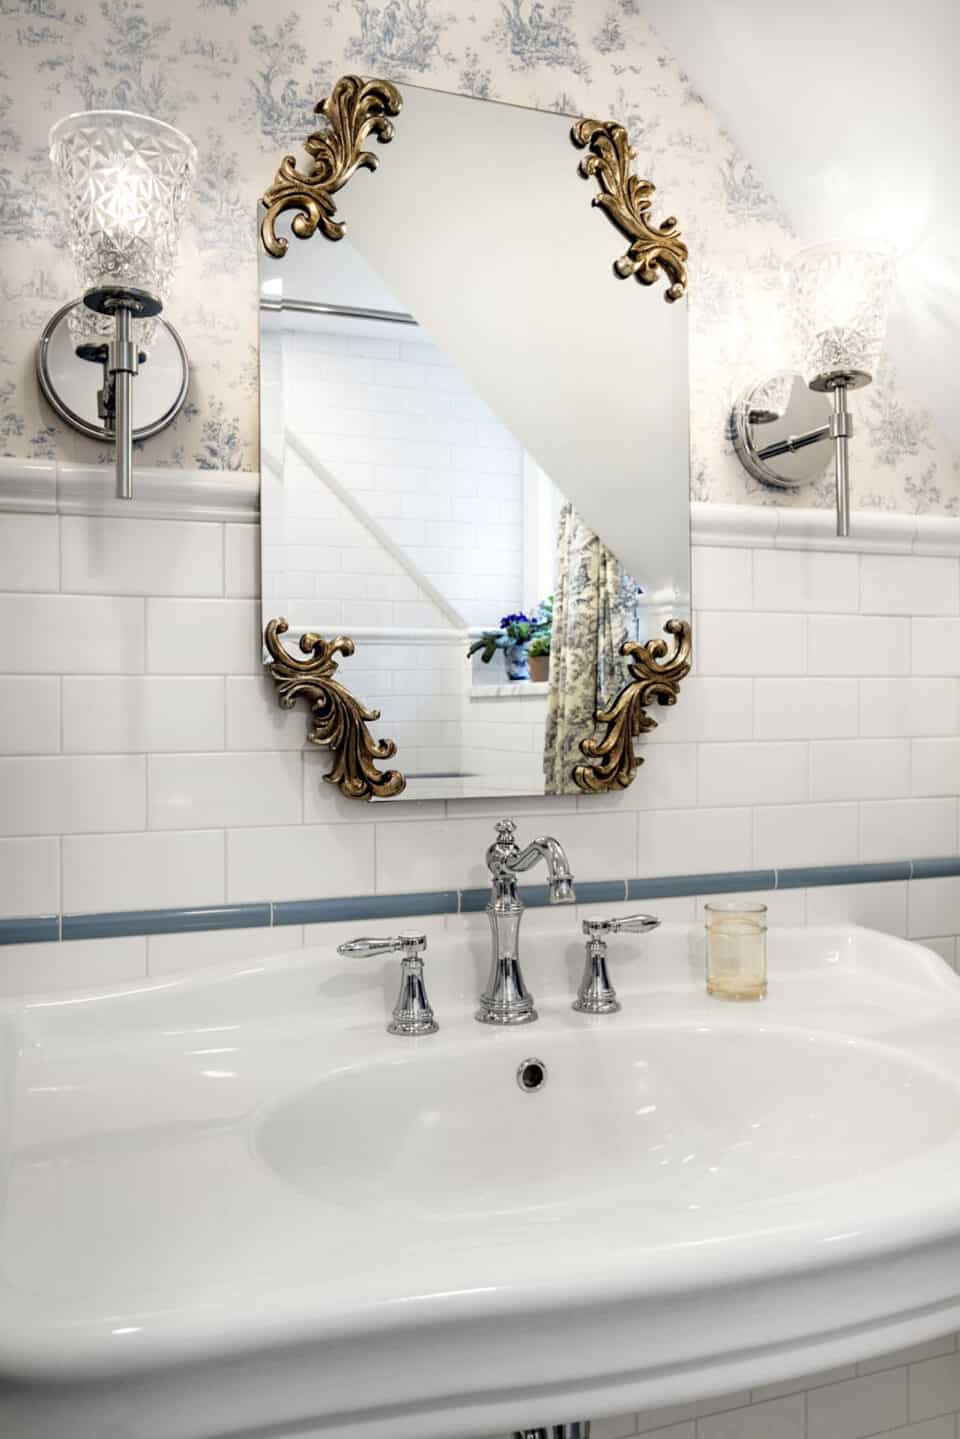 Bathroom mirror with decorative gold filigree